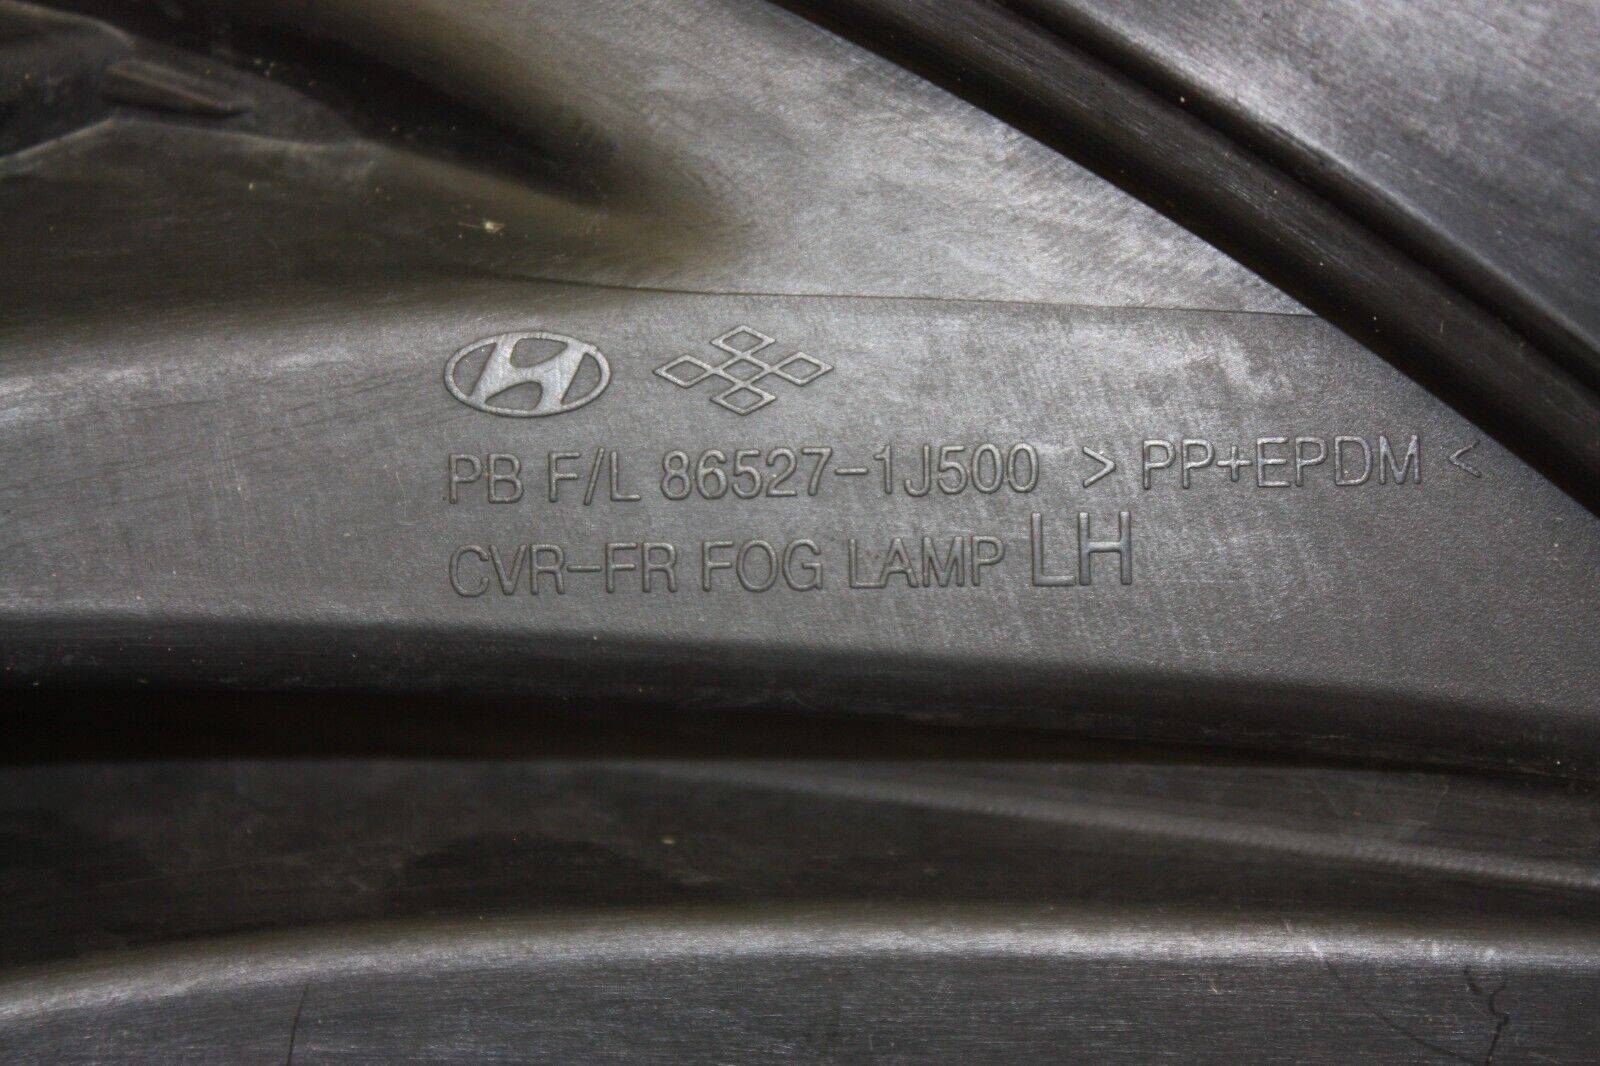 Hyundai-i20-Front-Bumper-Left-Fog-Light-Cover-Grill-2012-to-2014-86527-1J500-176257406826-9